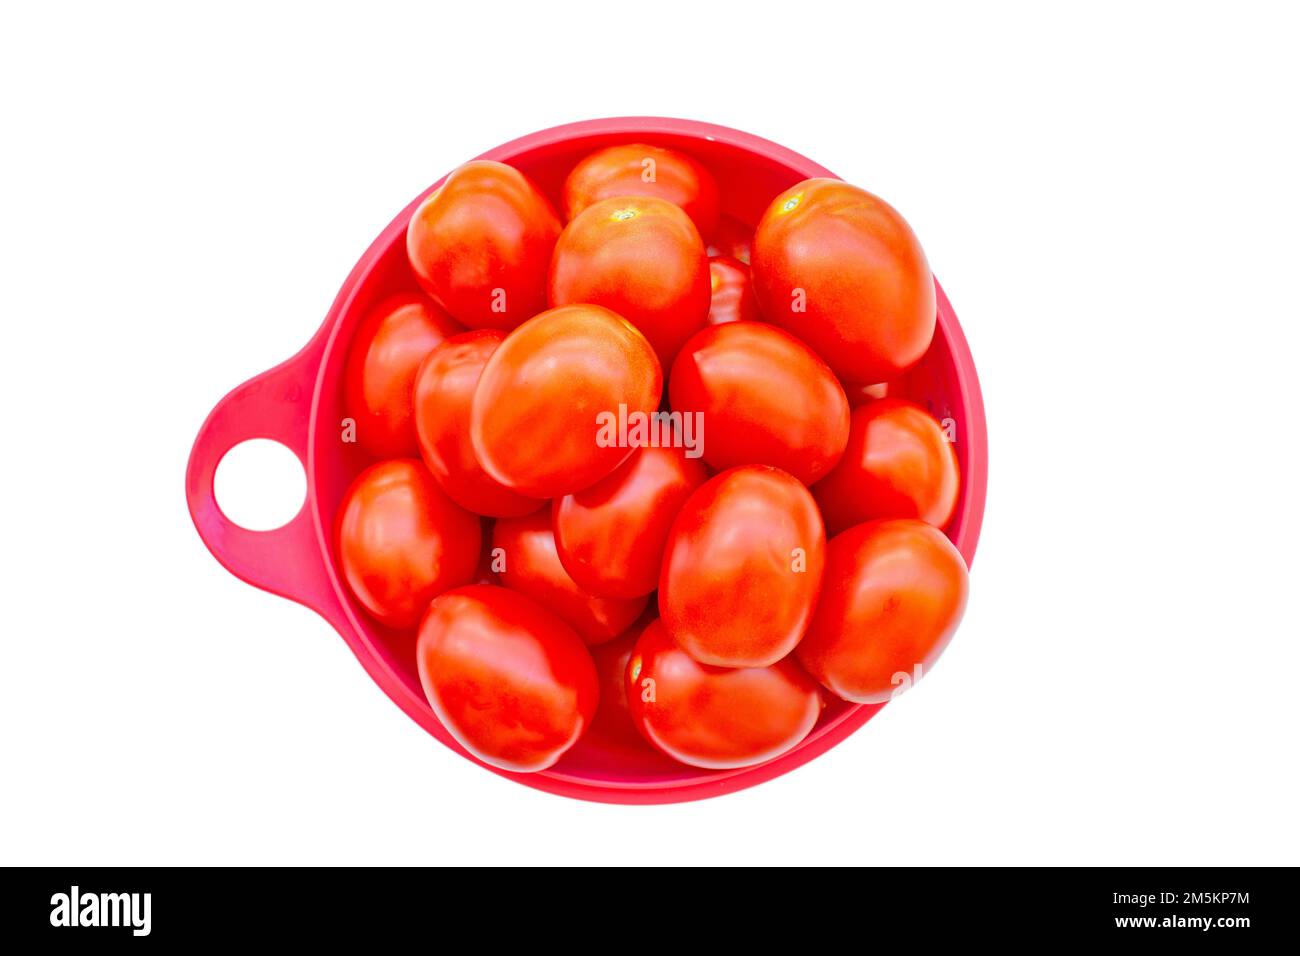 Bowl of ripe tomatoes isolated on white background Stock Photo